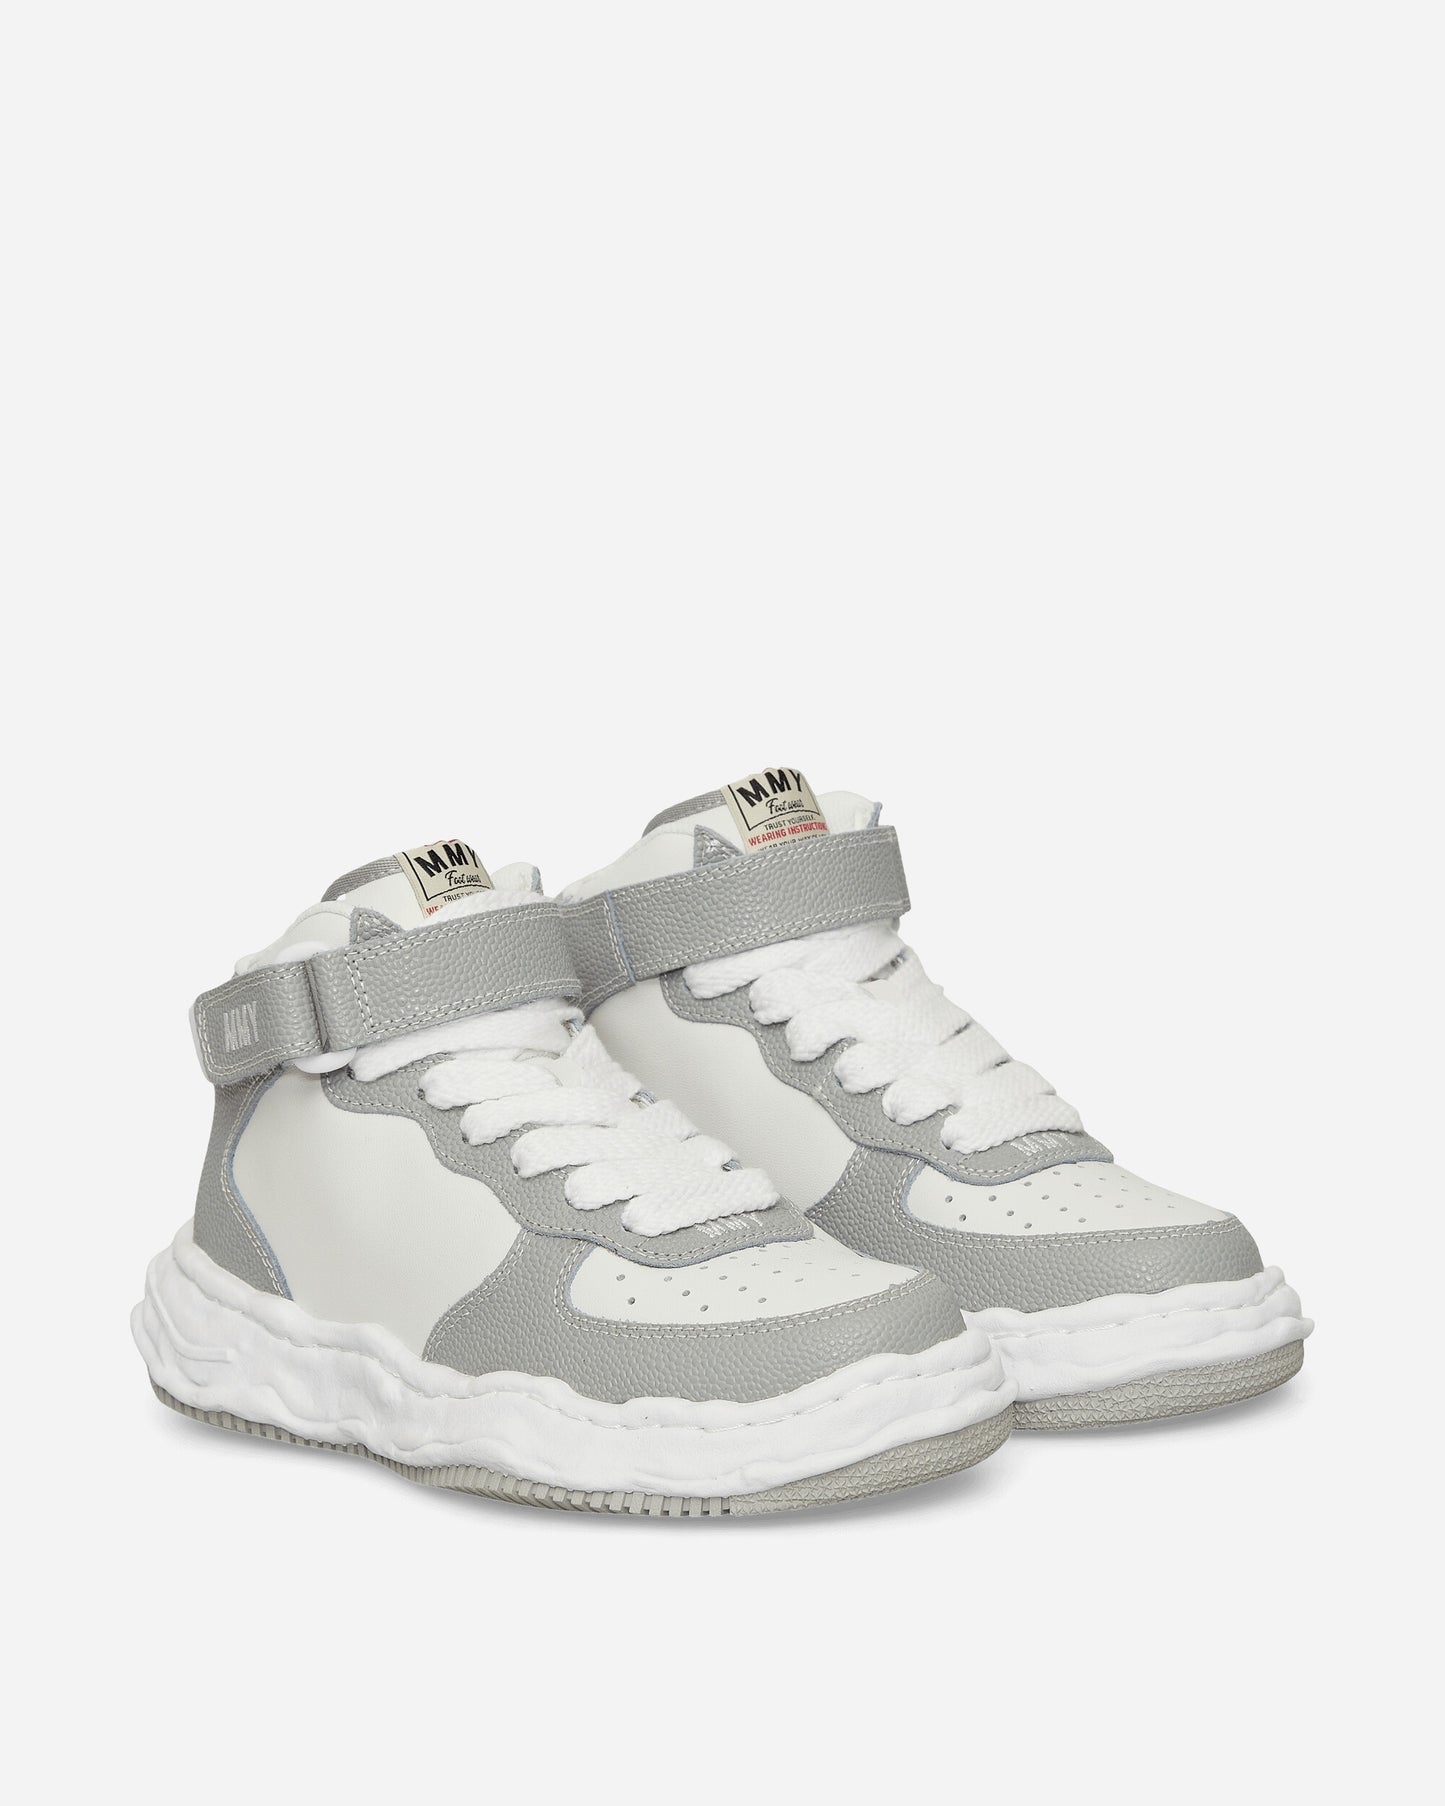 Maison MIHARA YASUHIRO Wayne High/Original Sole Bascket Leather Grey/White Sneakers High A11FW711 GREYWHITE